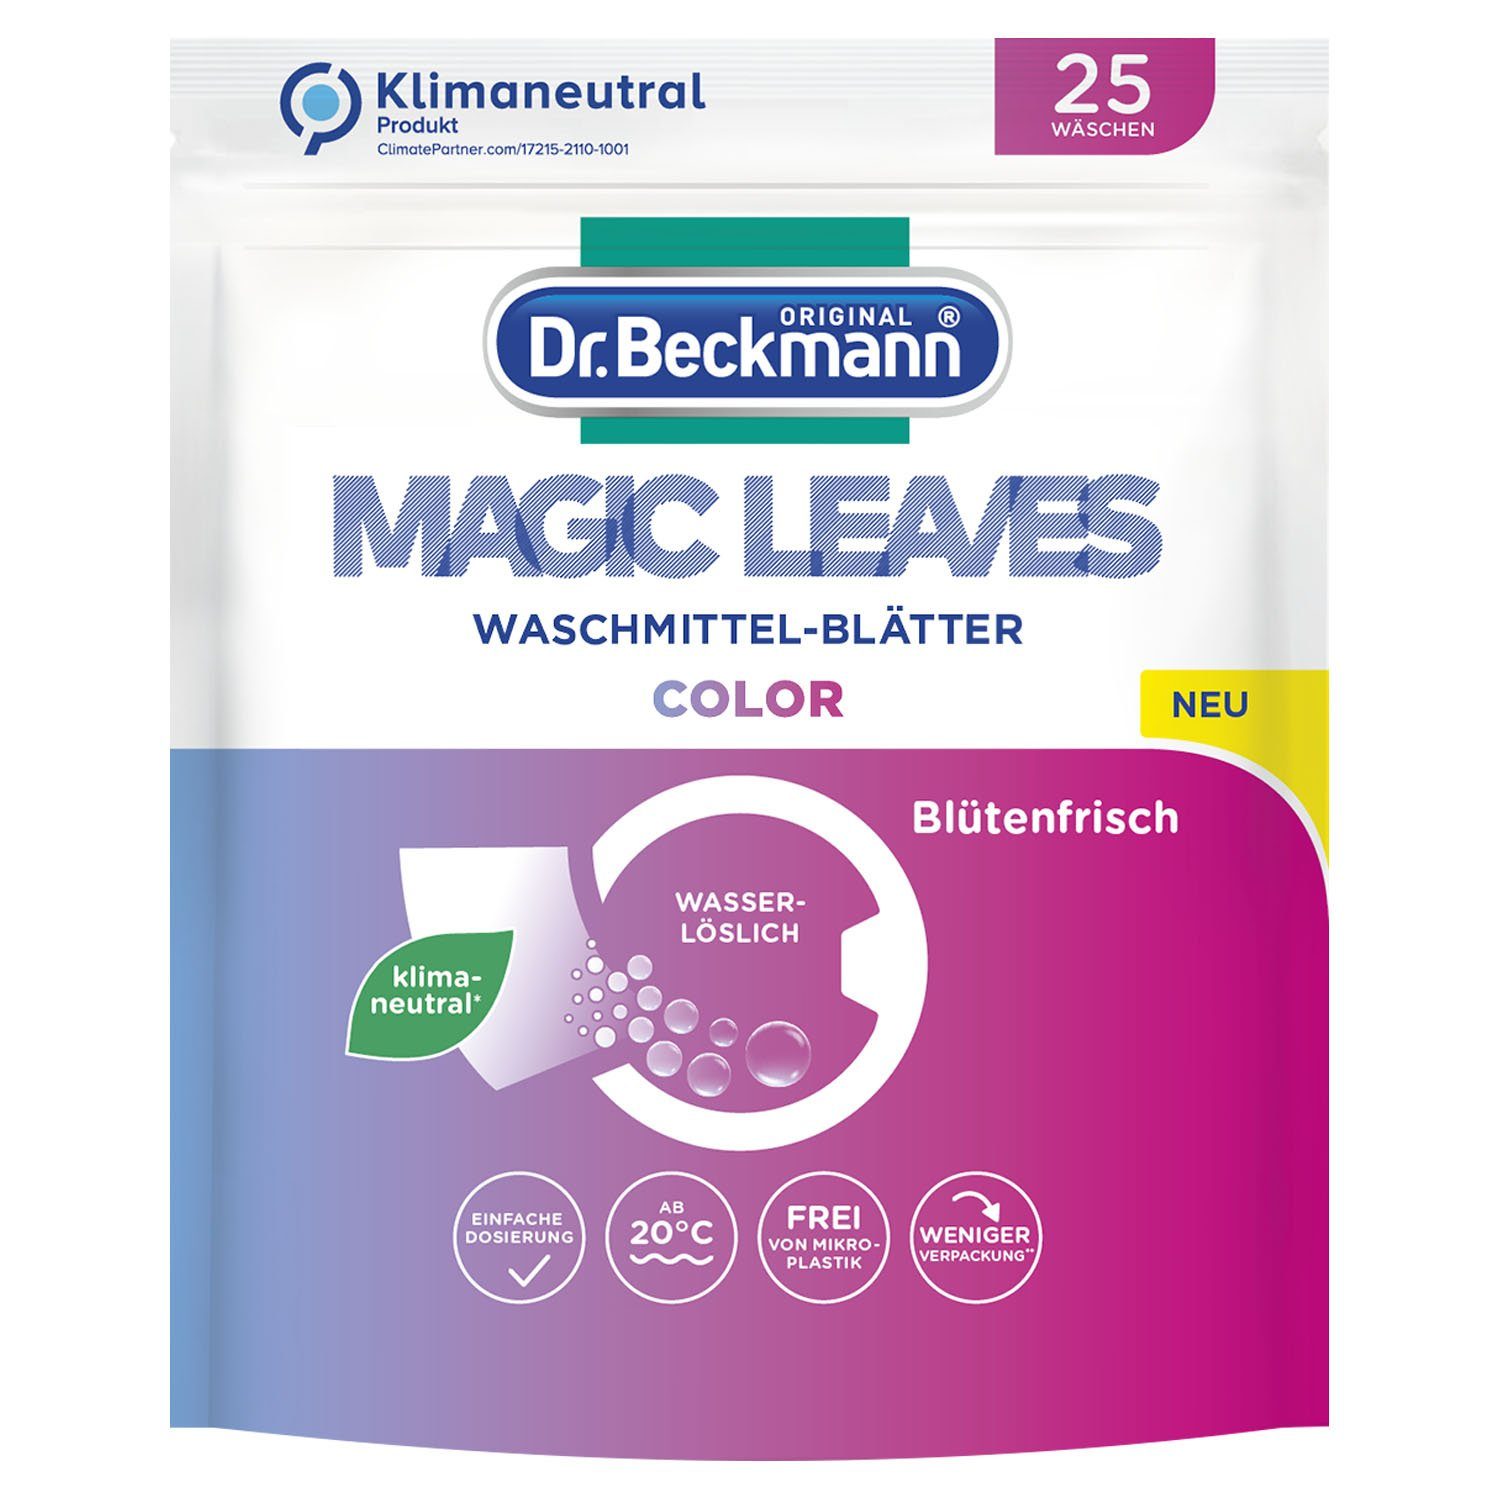 Dr. Beckmann MAGIC LEAVES COLOR, wasserlösliche Waschblätter, 25 Blätter Colorwaschmittel (1-St)